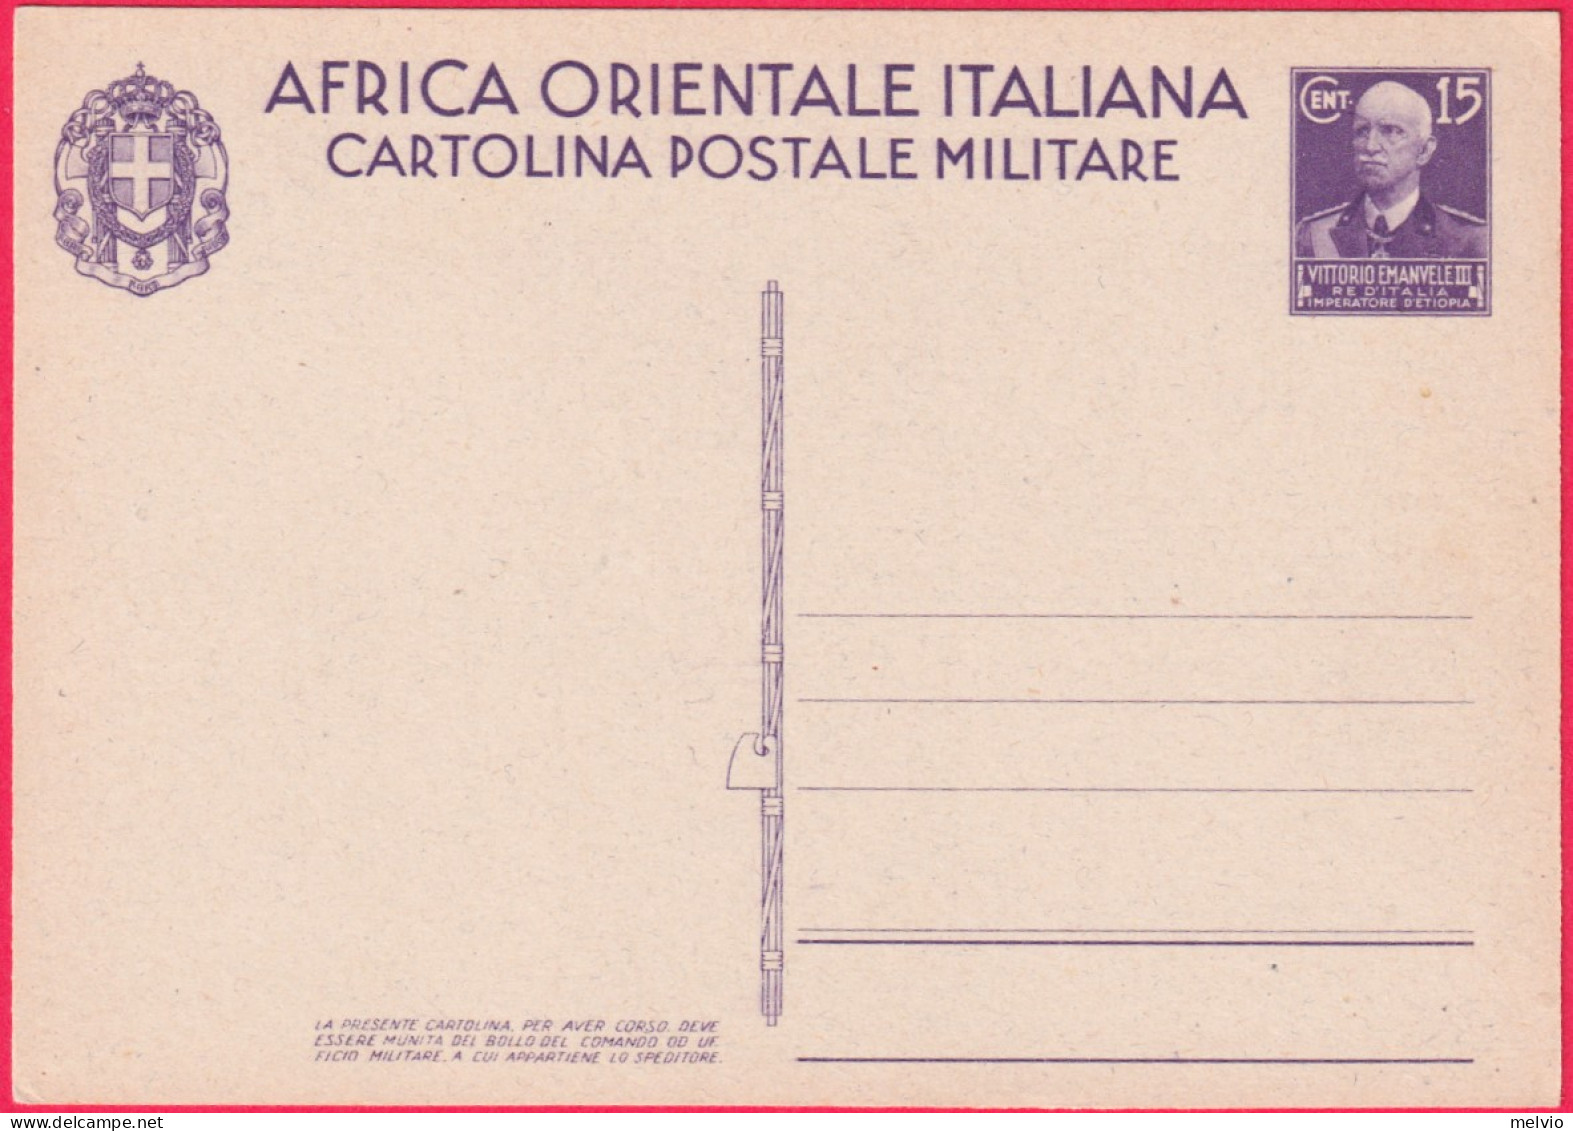 1937-Africa Orientale Italiana Cartolina Postale Militare Nuova Perfetta - Italian Eastern Africa